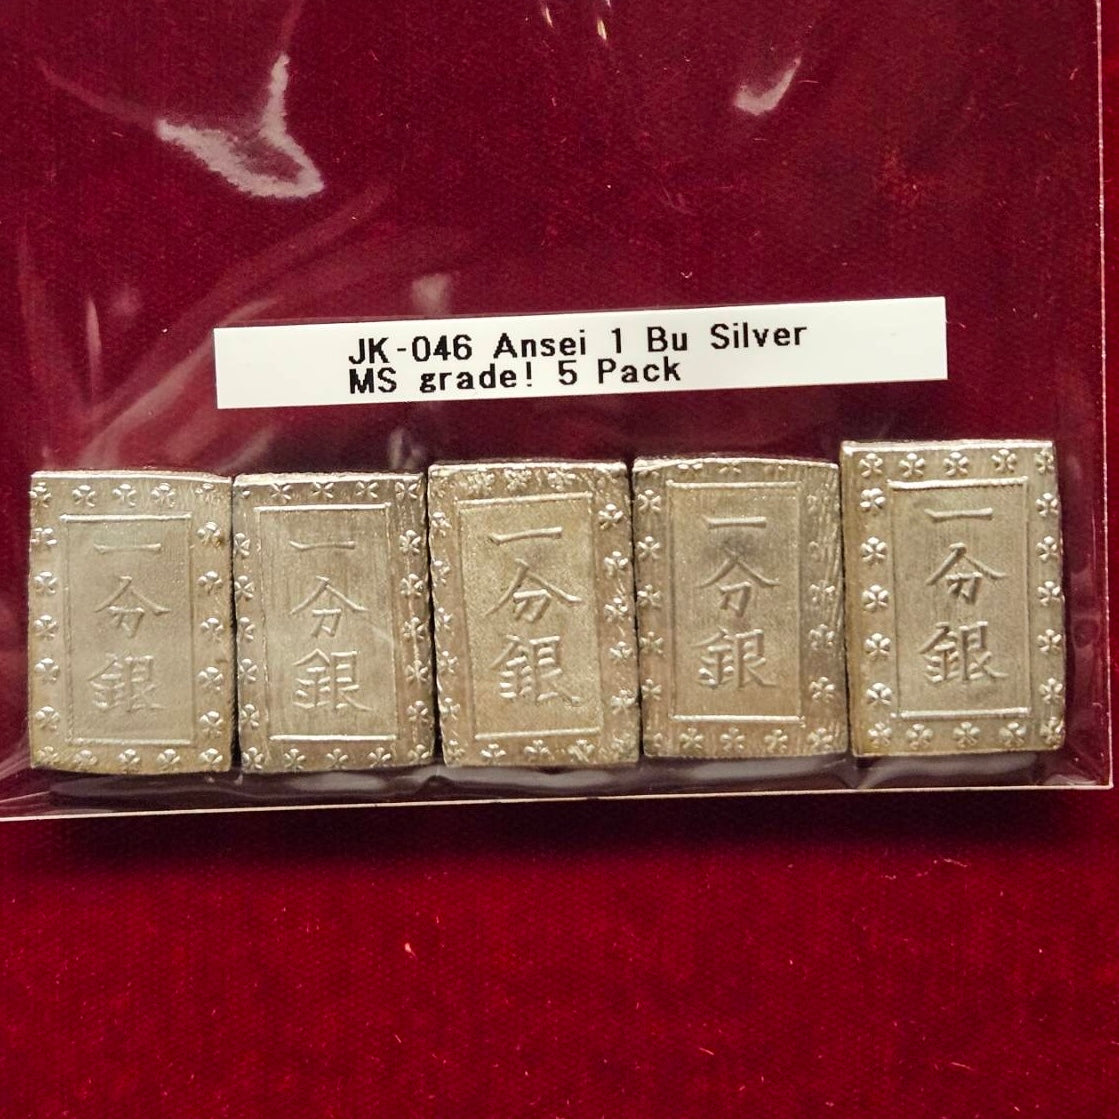 [JK-046] Ansei 1 Bu Silver MS grade! 5 Pack